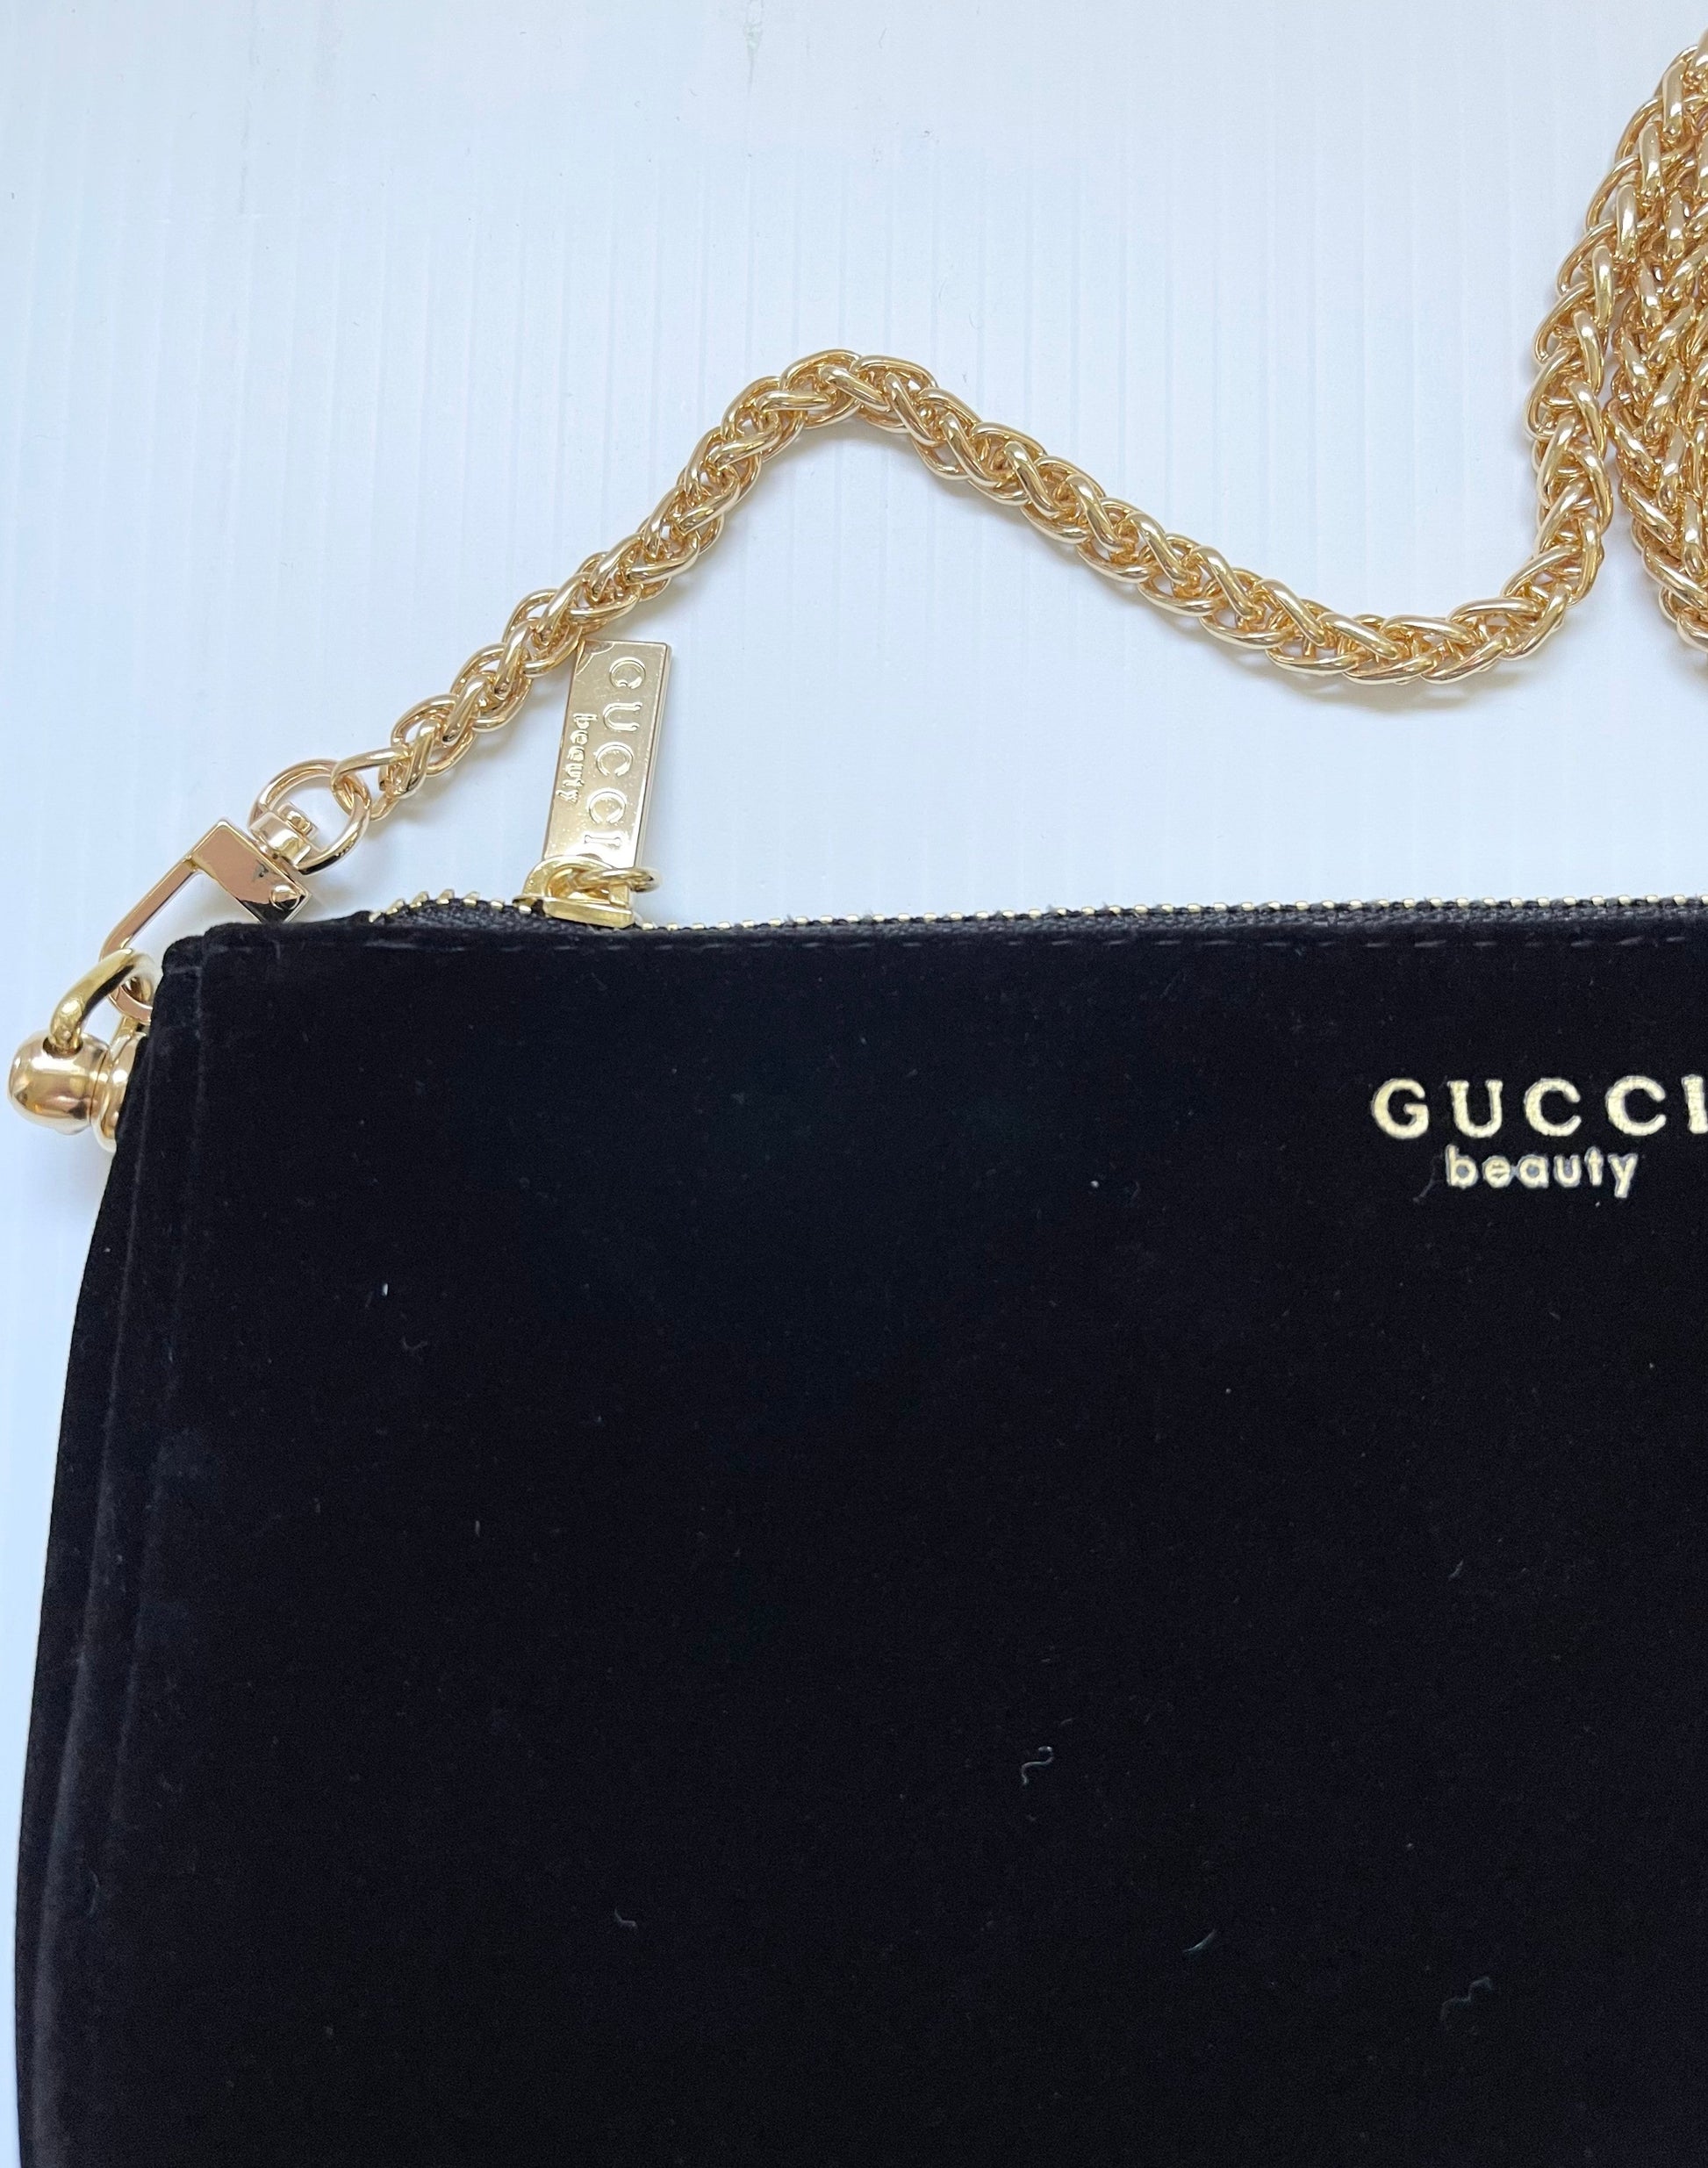 Gucci, Makeup, Black Velvet Gucci Beauty Makeup Bag